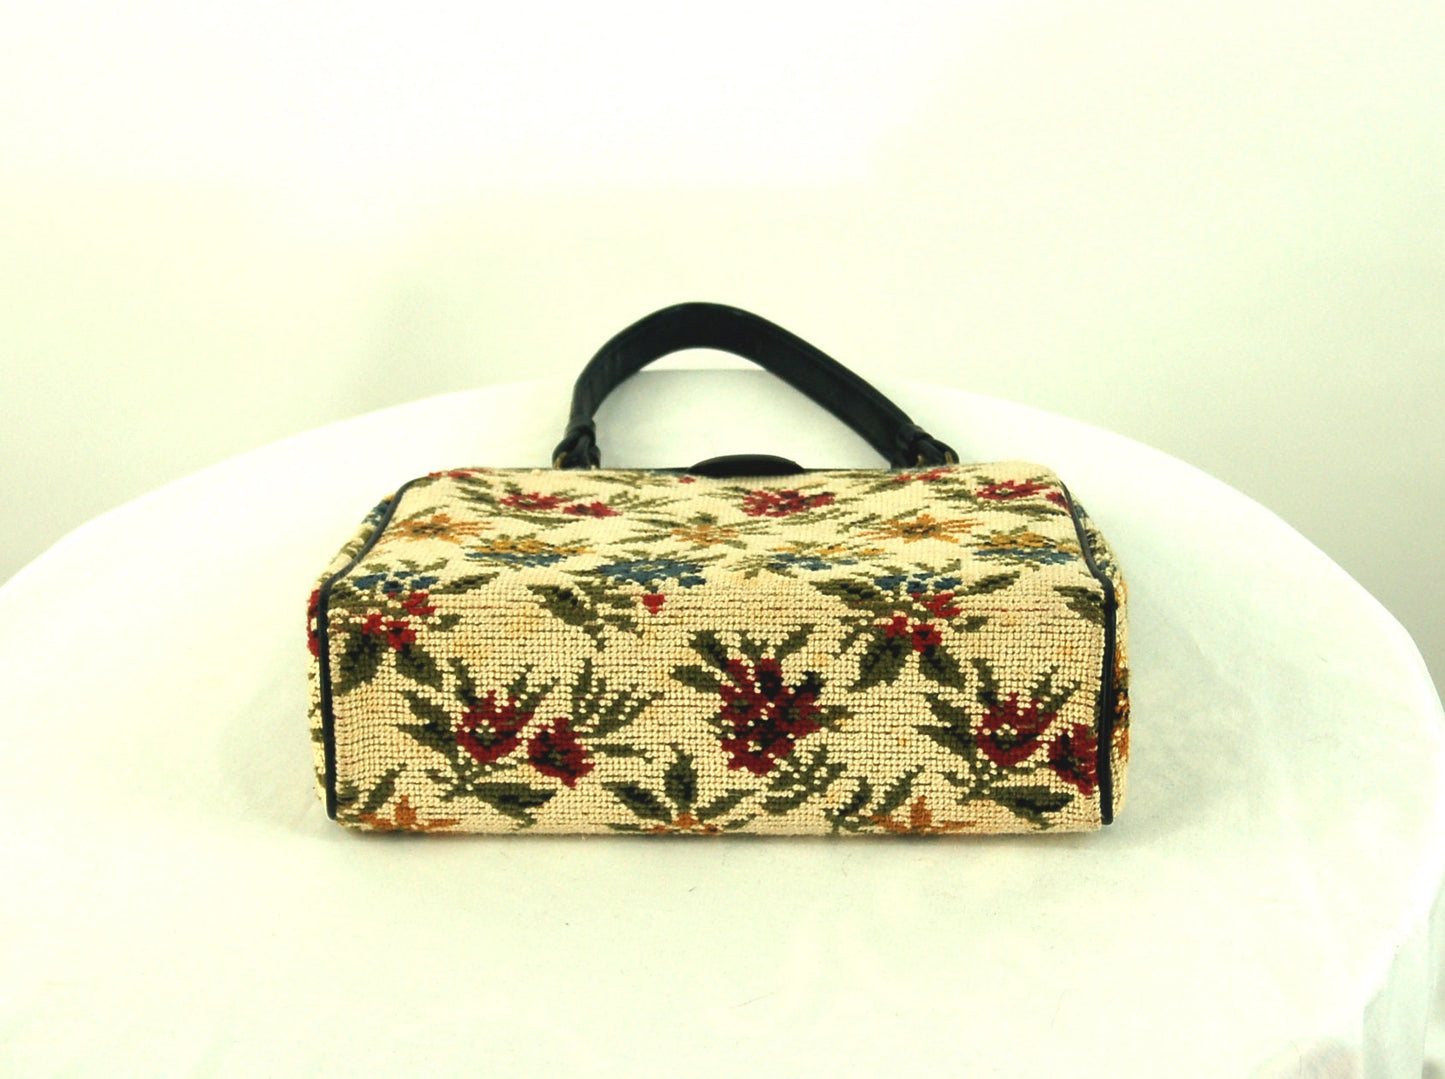 1960s needlepoint purse handbag floral carpet handbag by Kadin